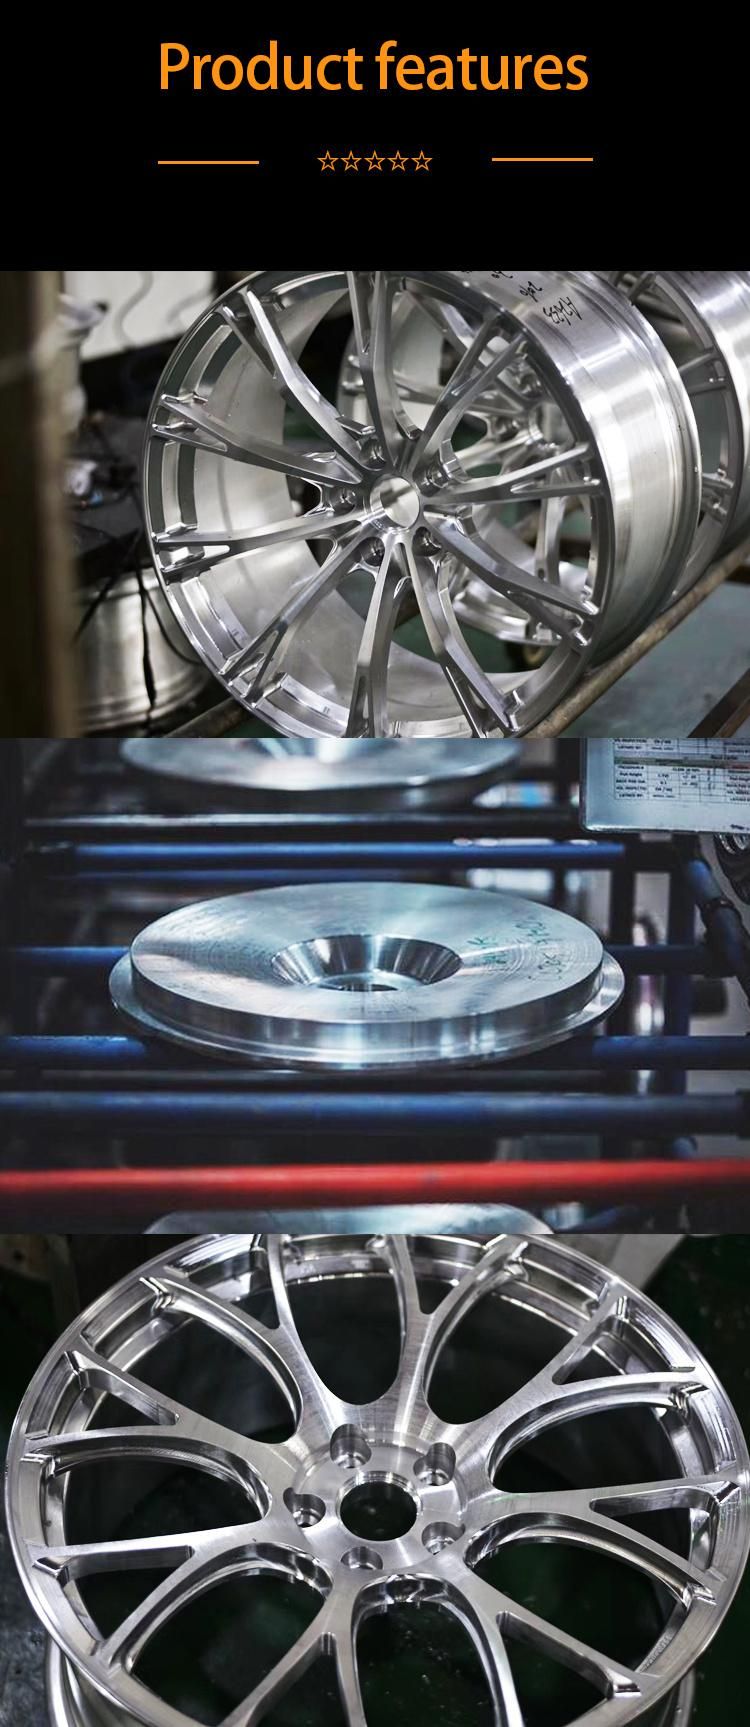   Alloy Rims Sport Aluminum Wheels for Customized Mag Rims Alloy Wheels Rims Wheels Forged Aluminum with Black+White